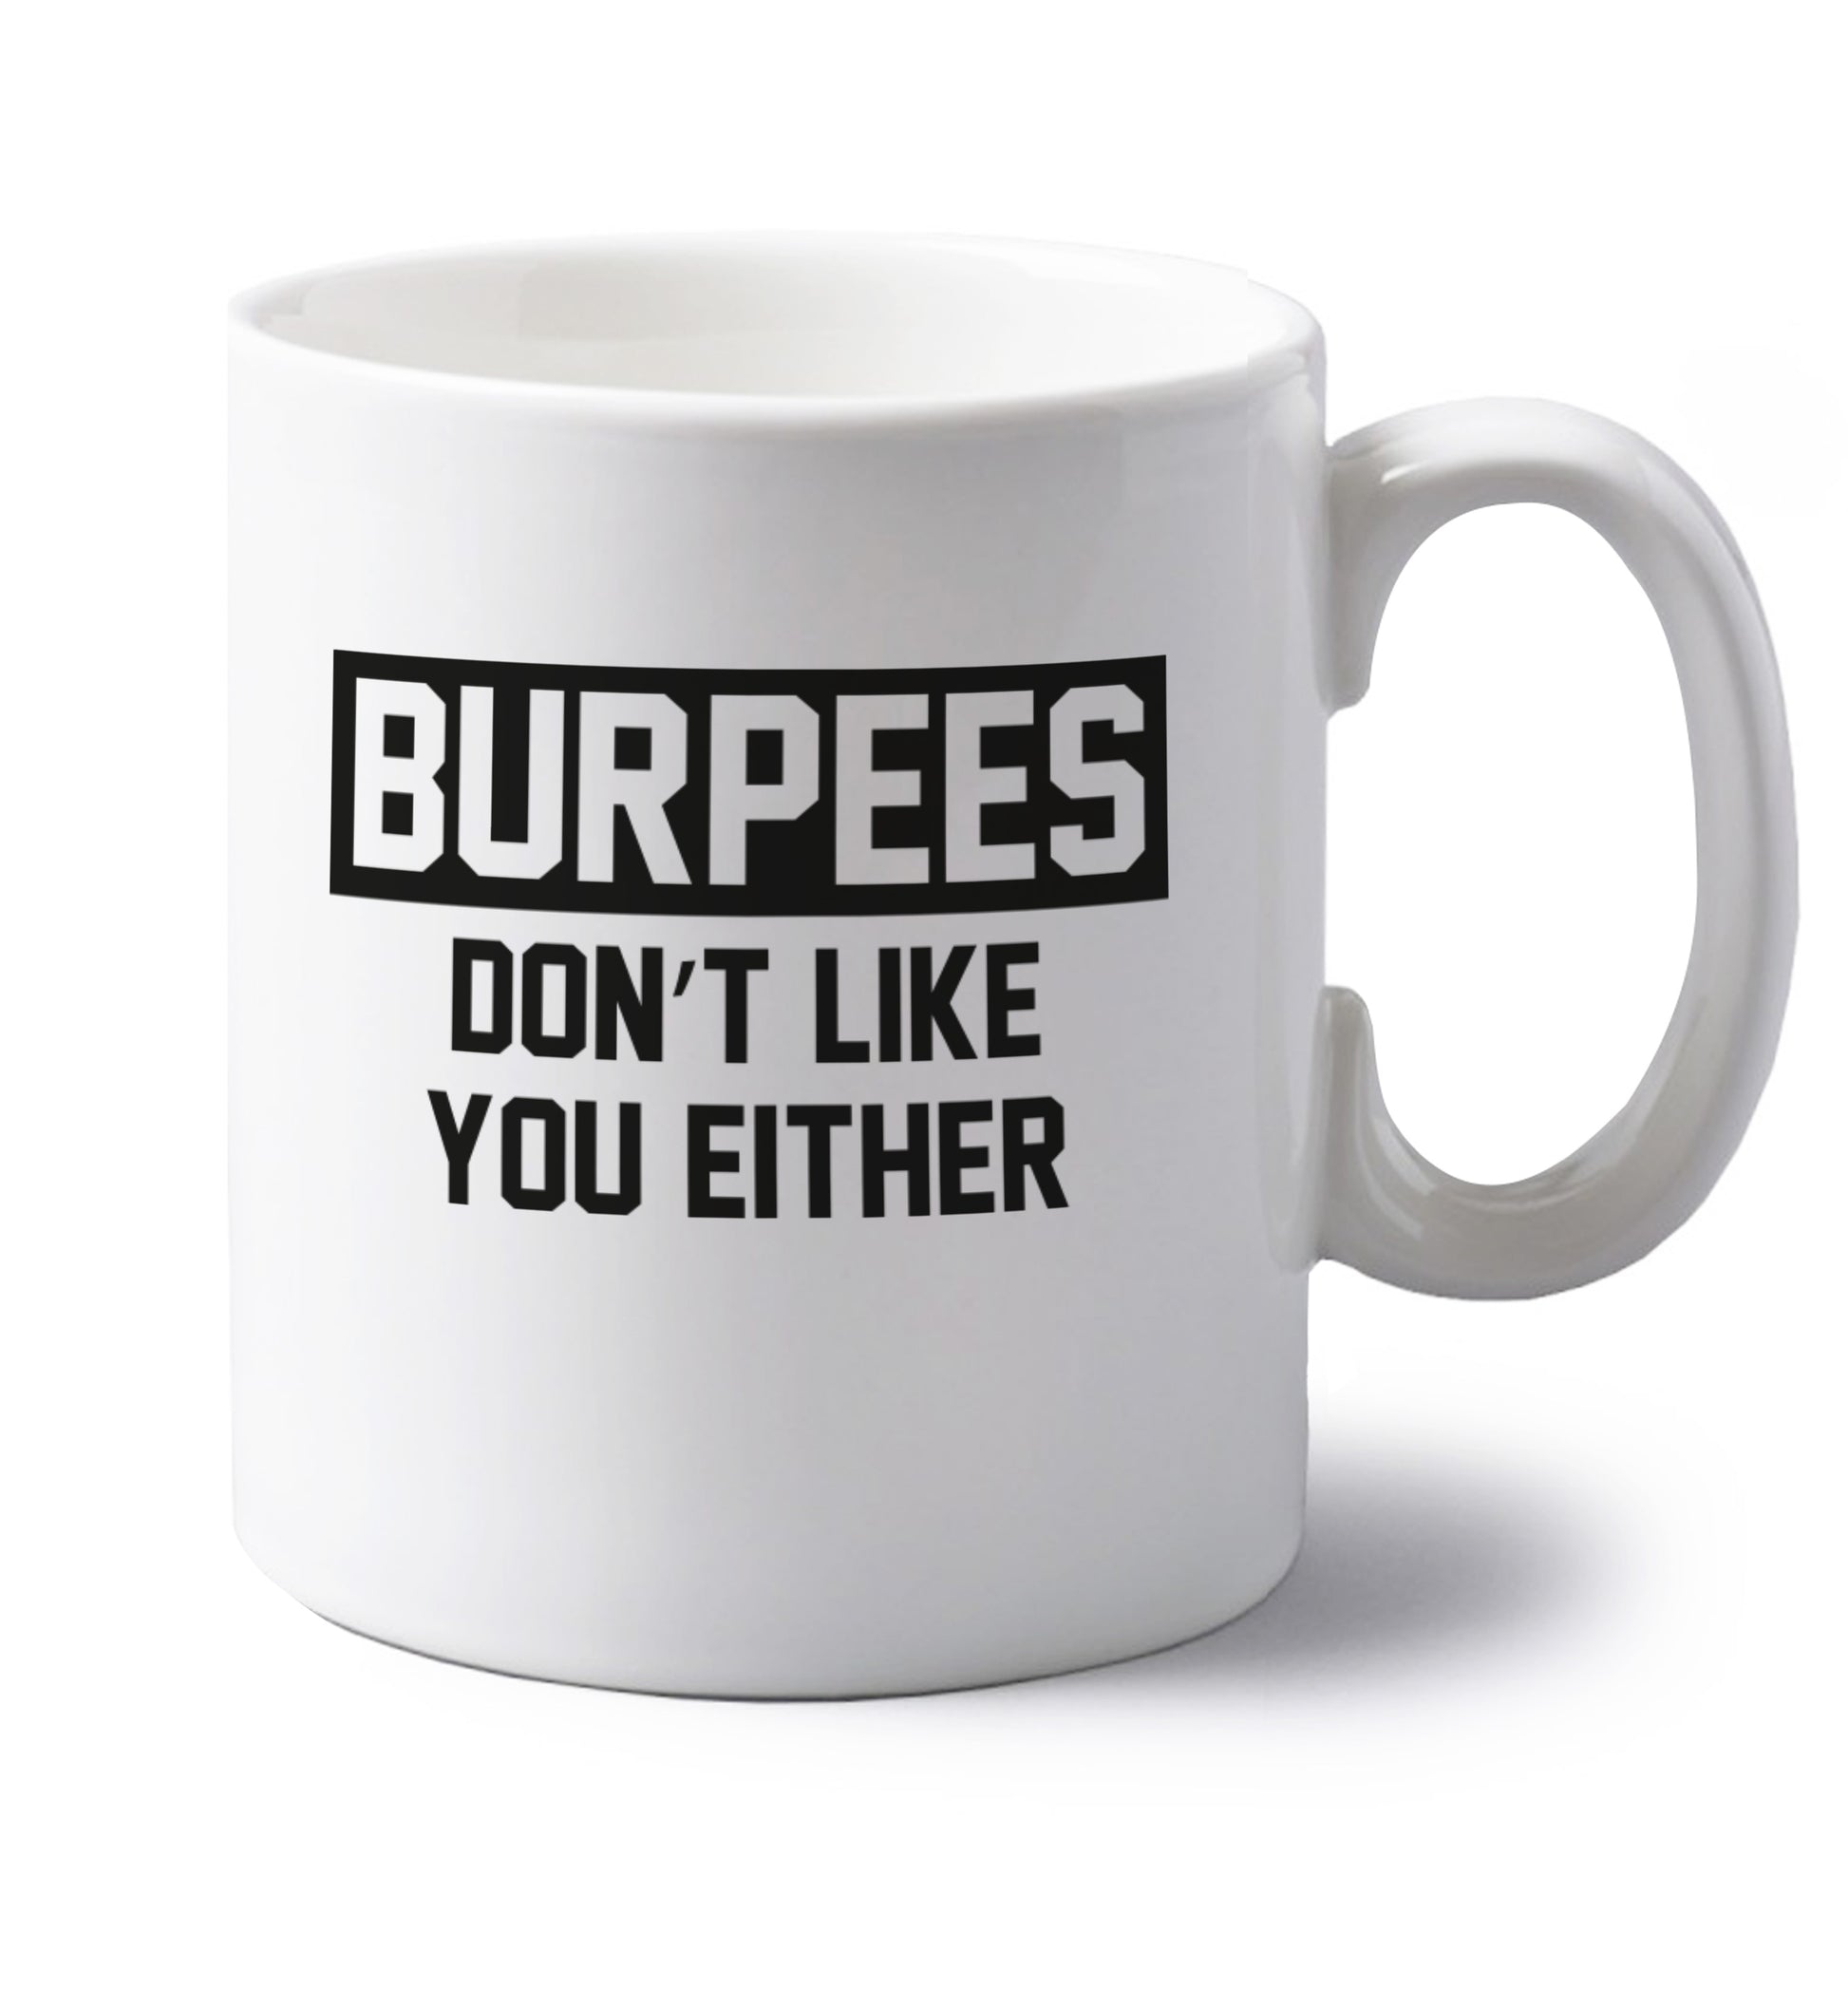 Burpees don't like you either left handed white ceramic mug 